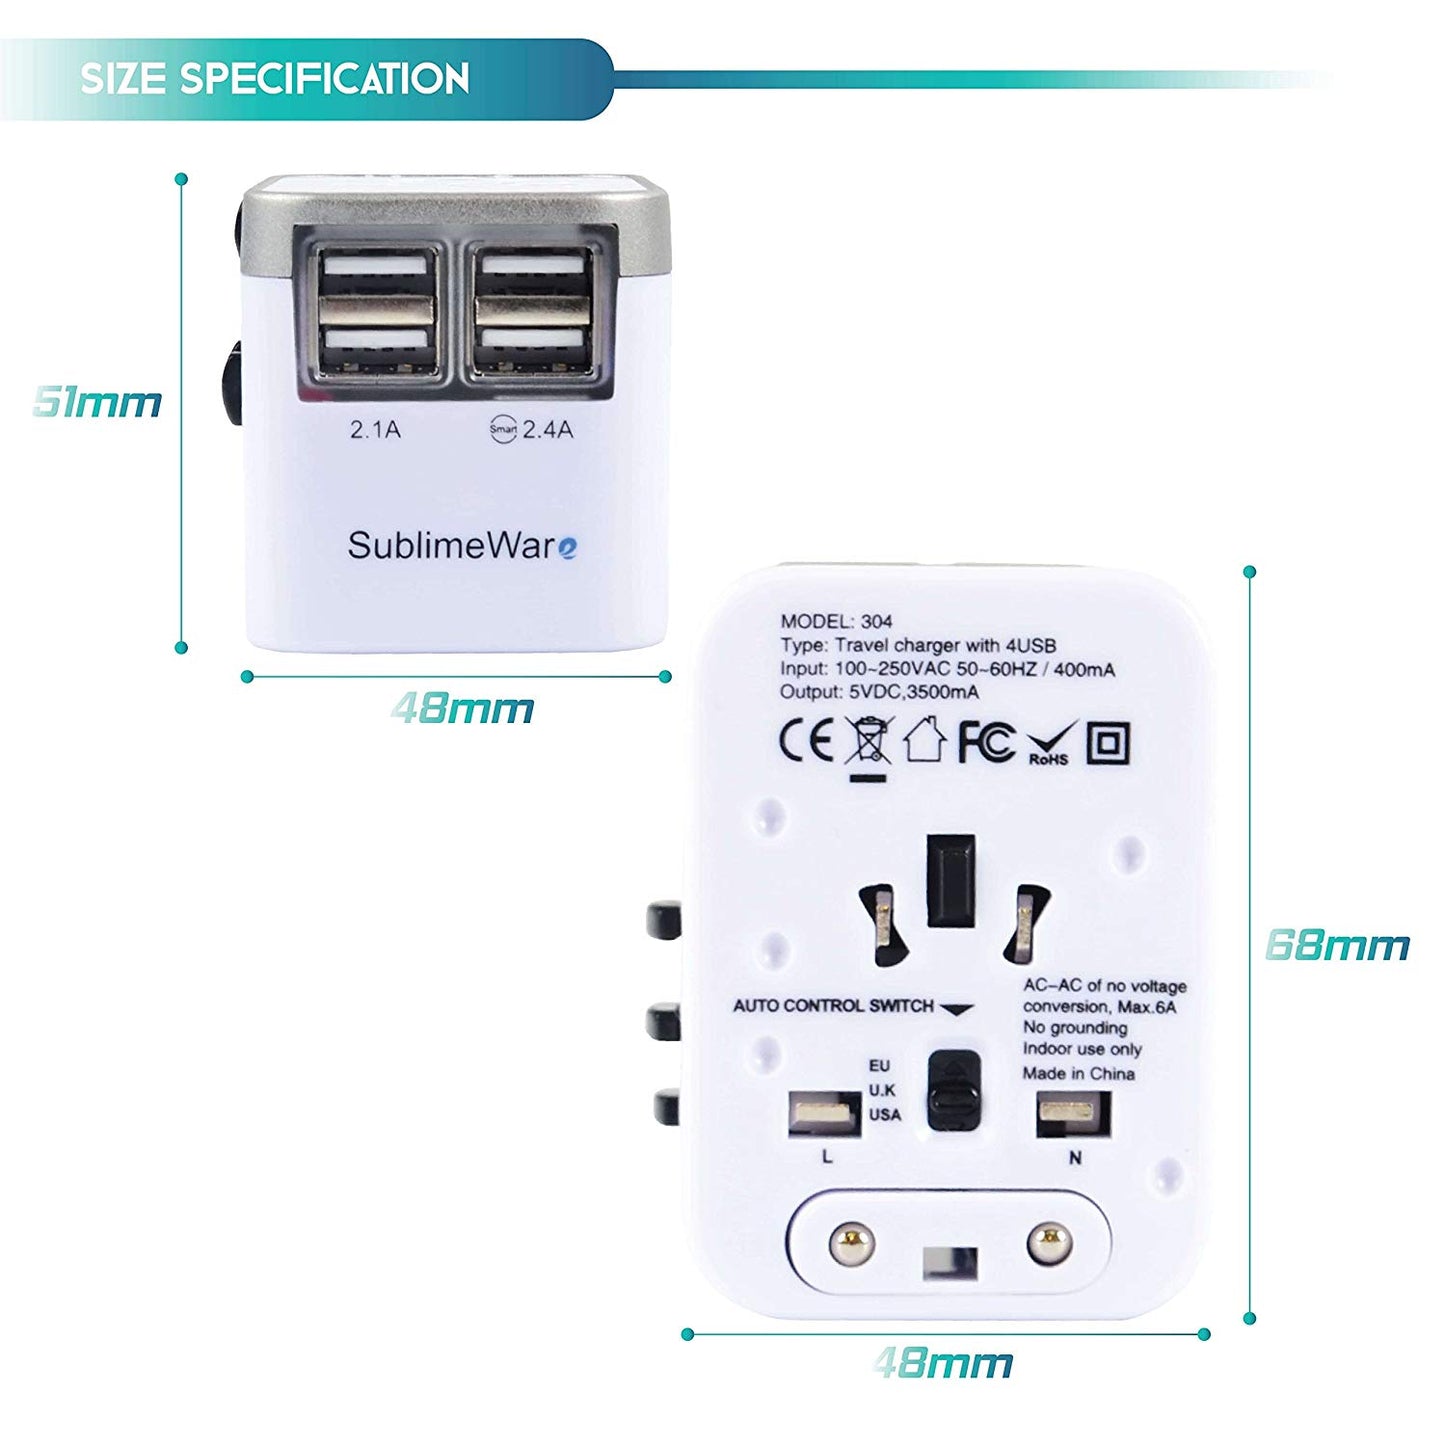 4 USB Ports Power Plug Adapter (White Silver)